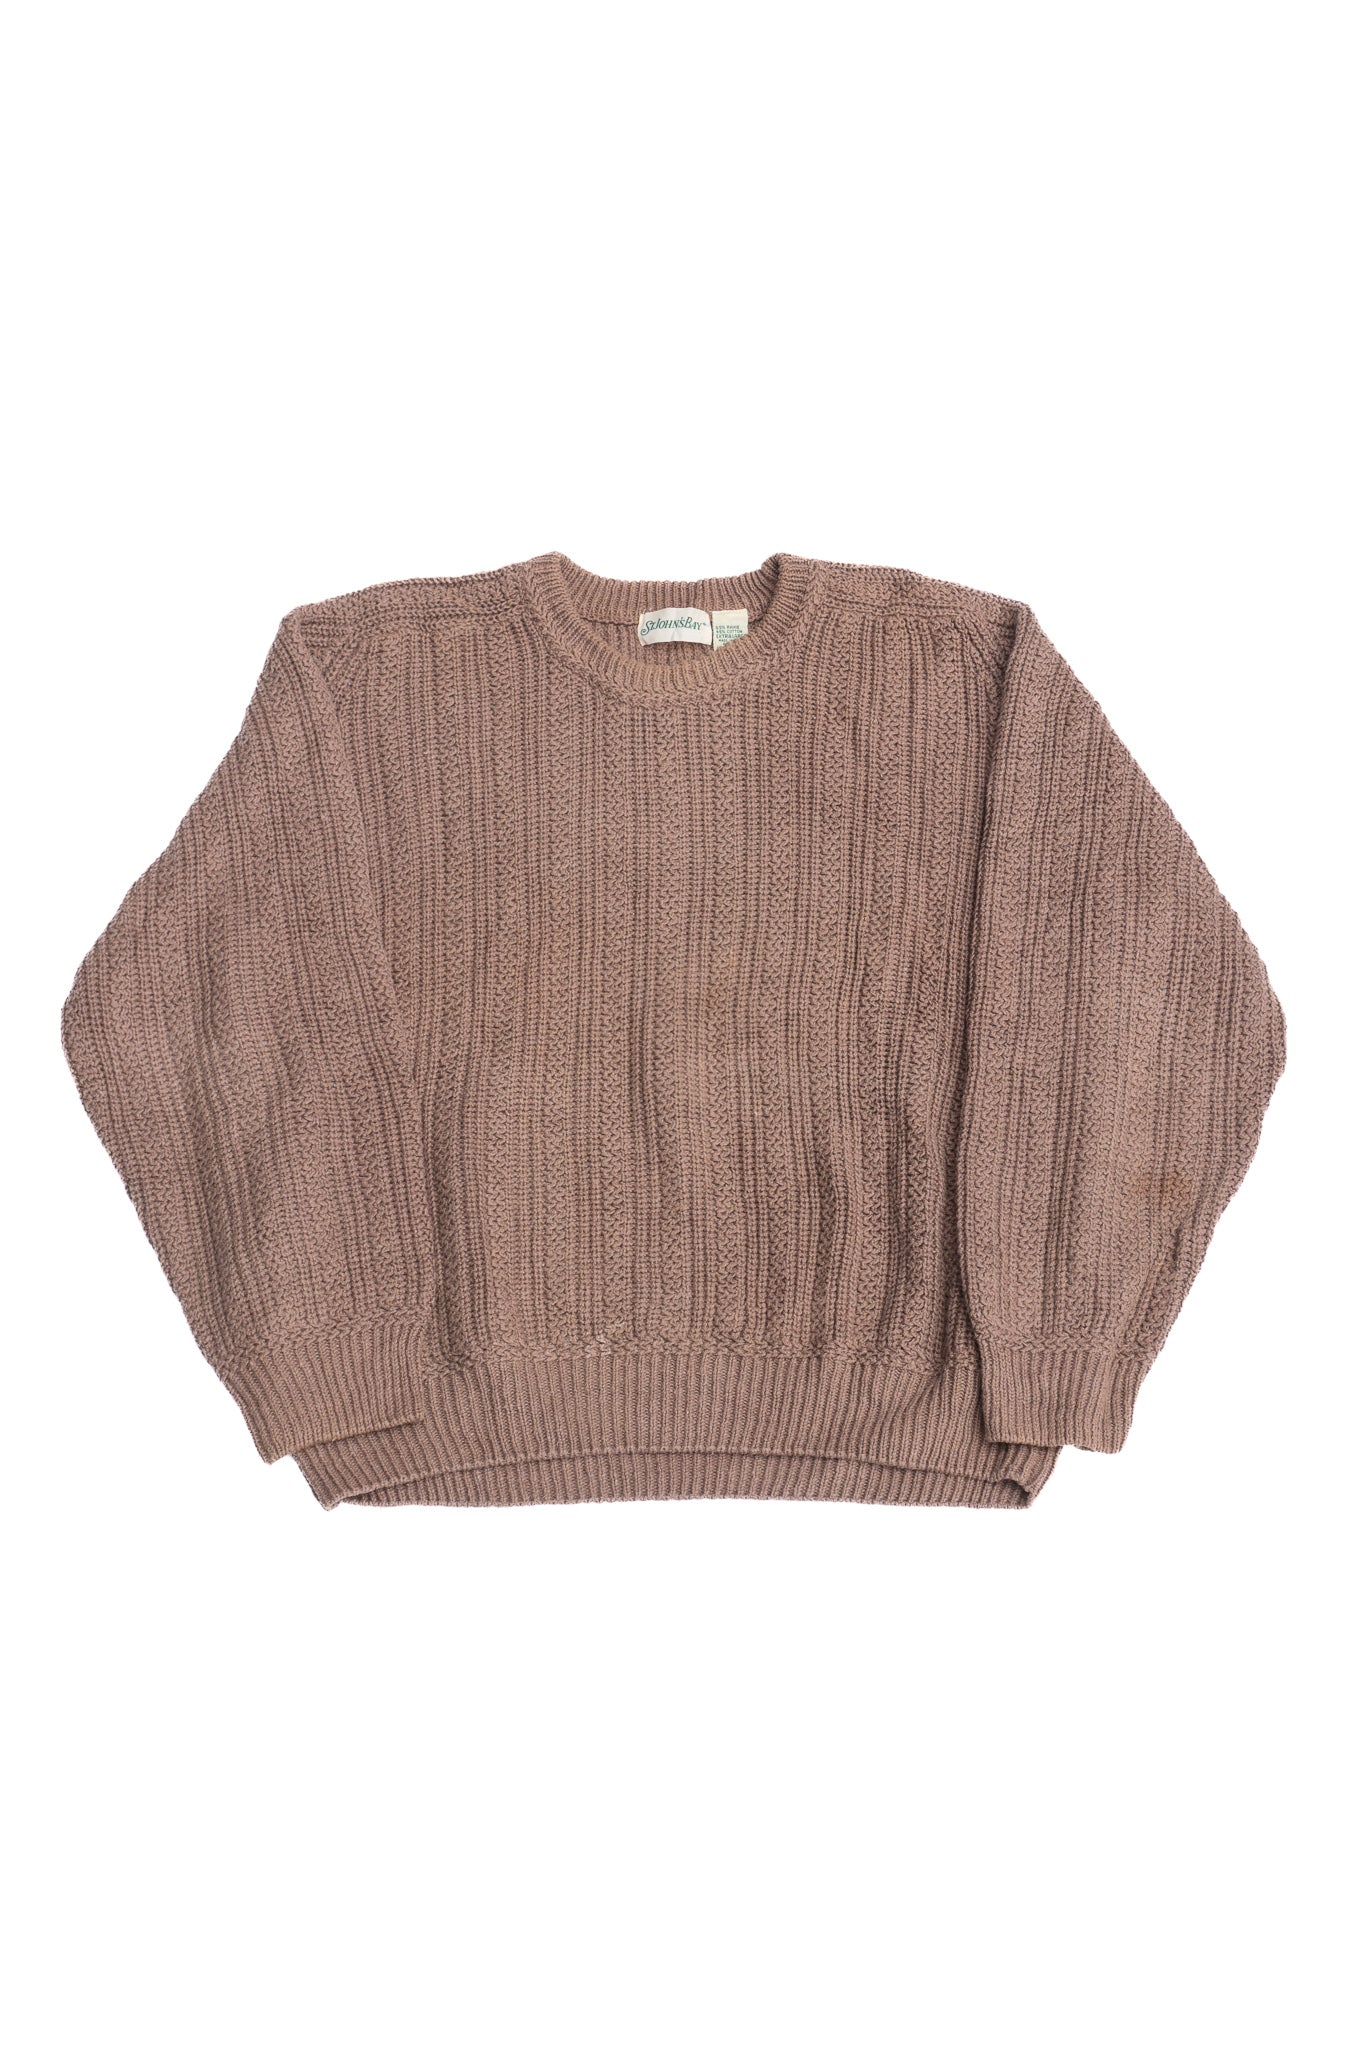 St. John's Bay Light Brown Knitted Sweater